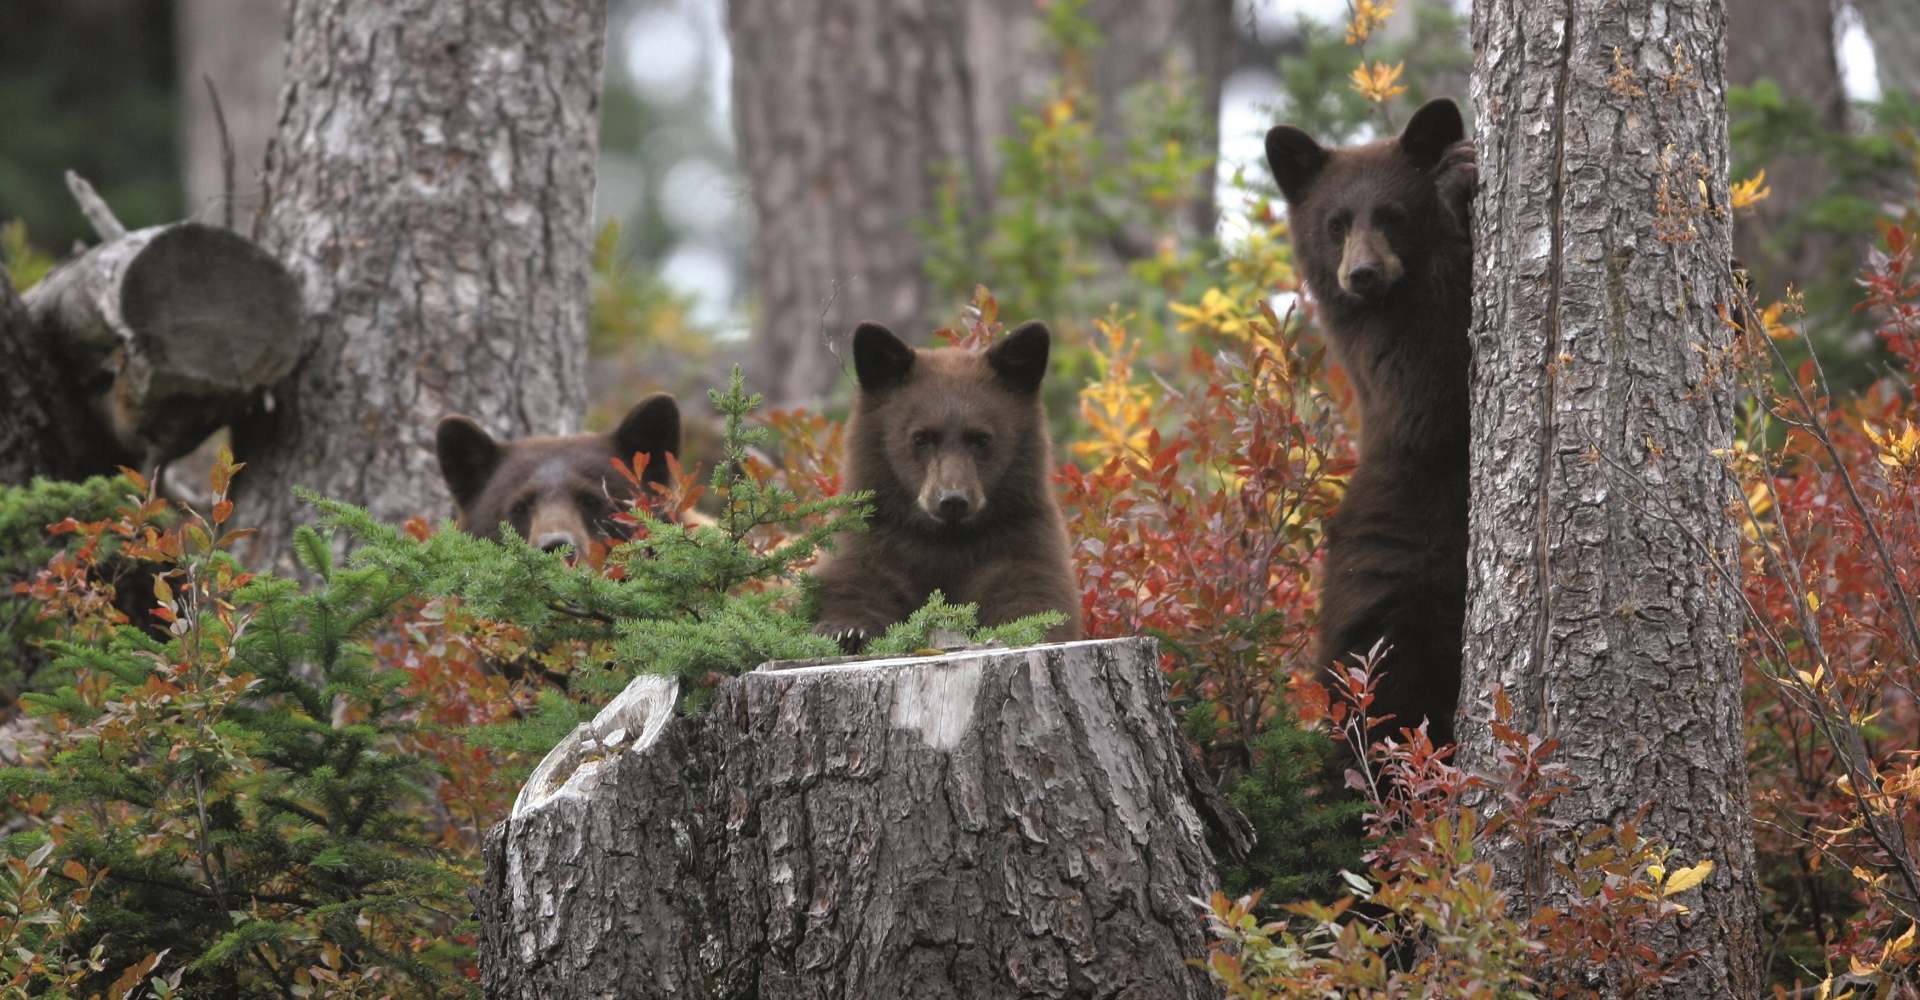 Black bear cubs | Tourism Whistler/Michael Allen